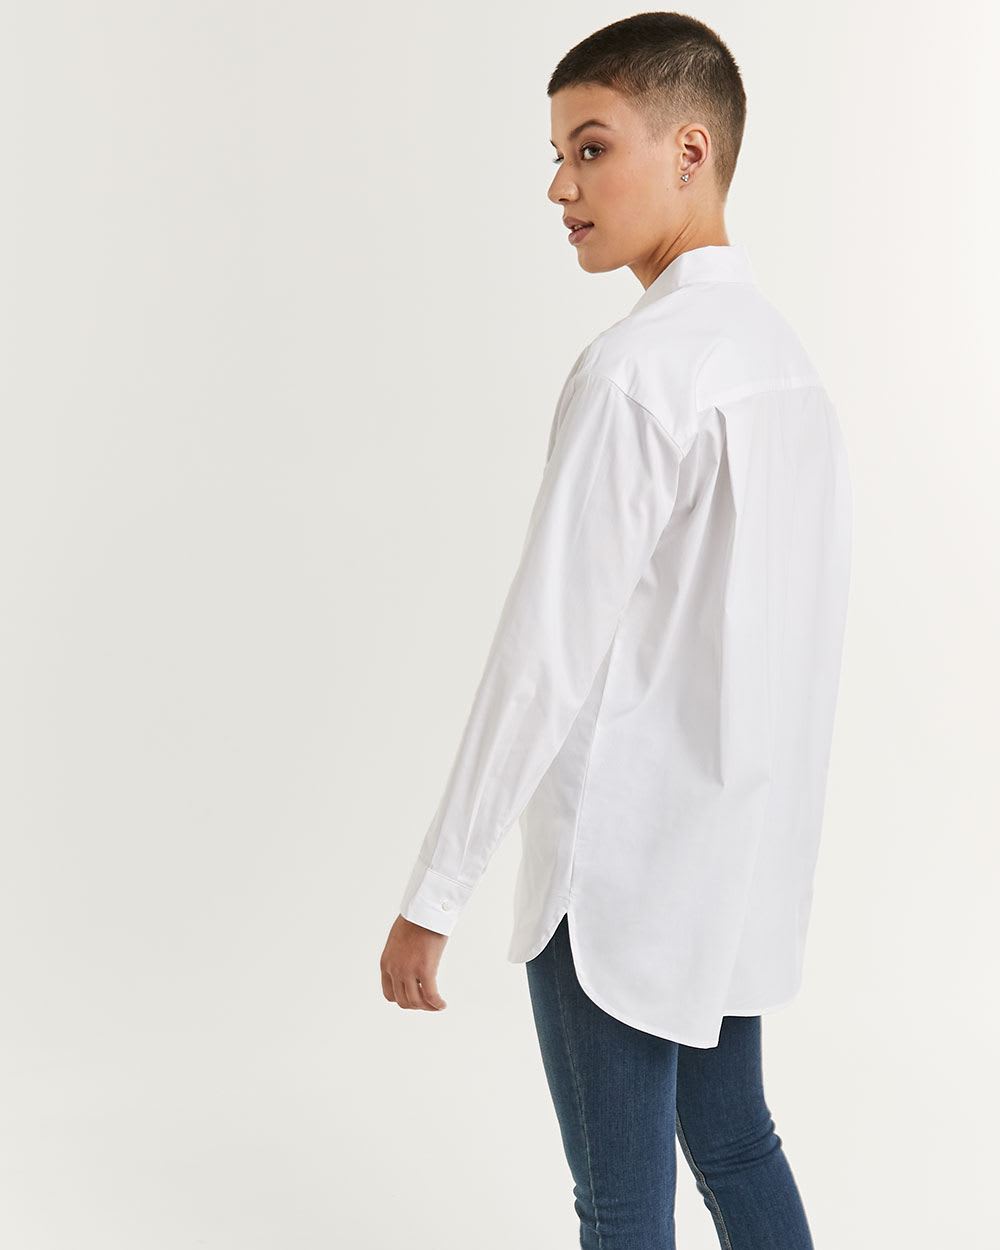 Long Sleeve Poplin Tunic with Shirt Collar